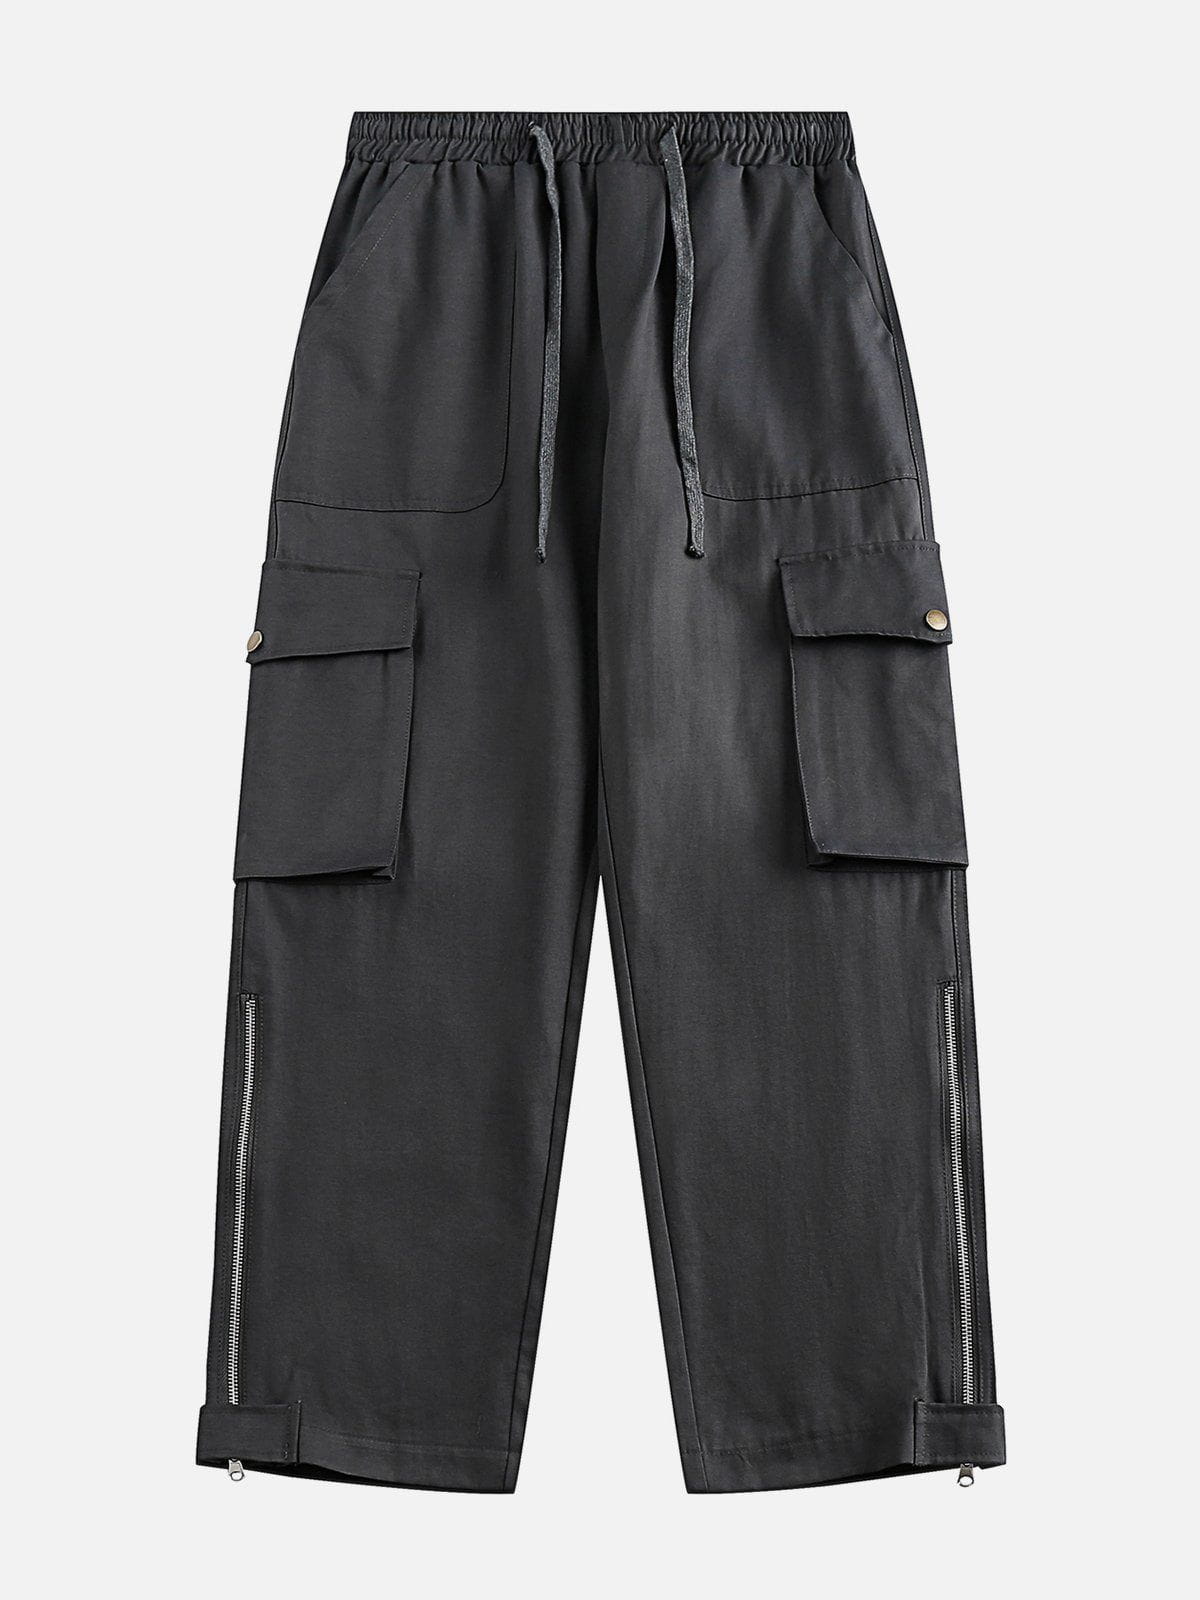 Majesda® - Multi-pocket ZIP UP Cargo Pants outfit ideas streetwear fashion